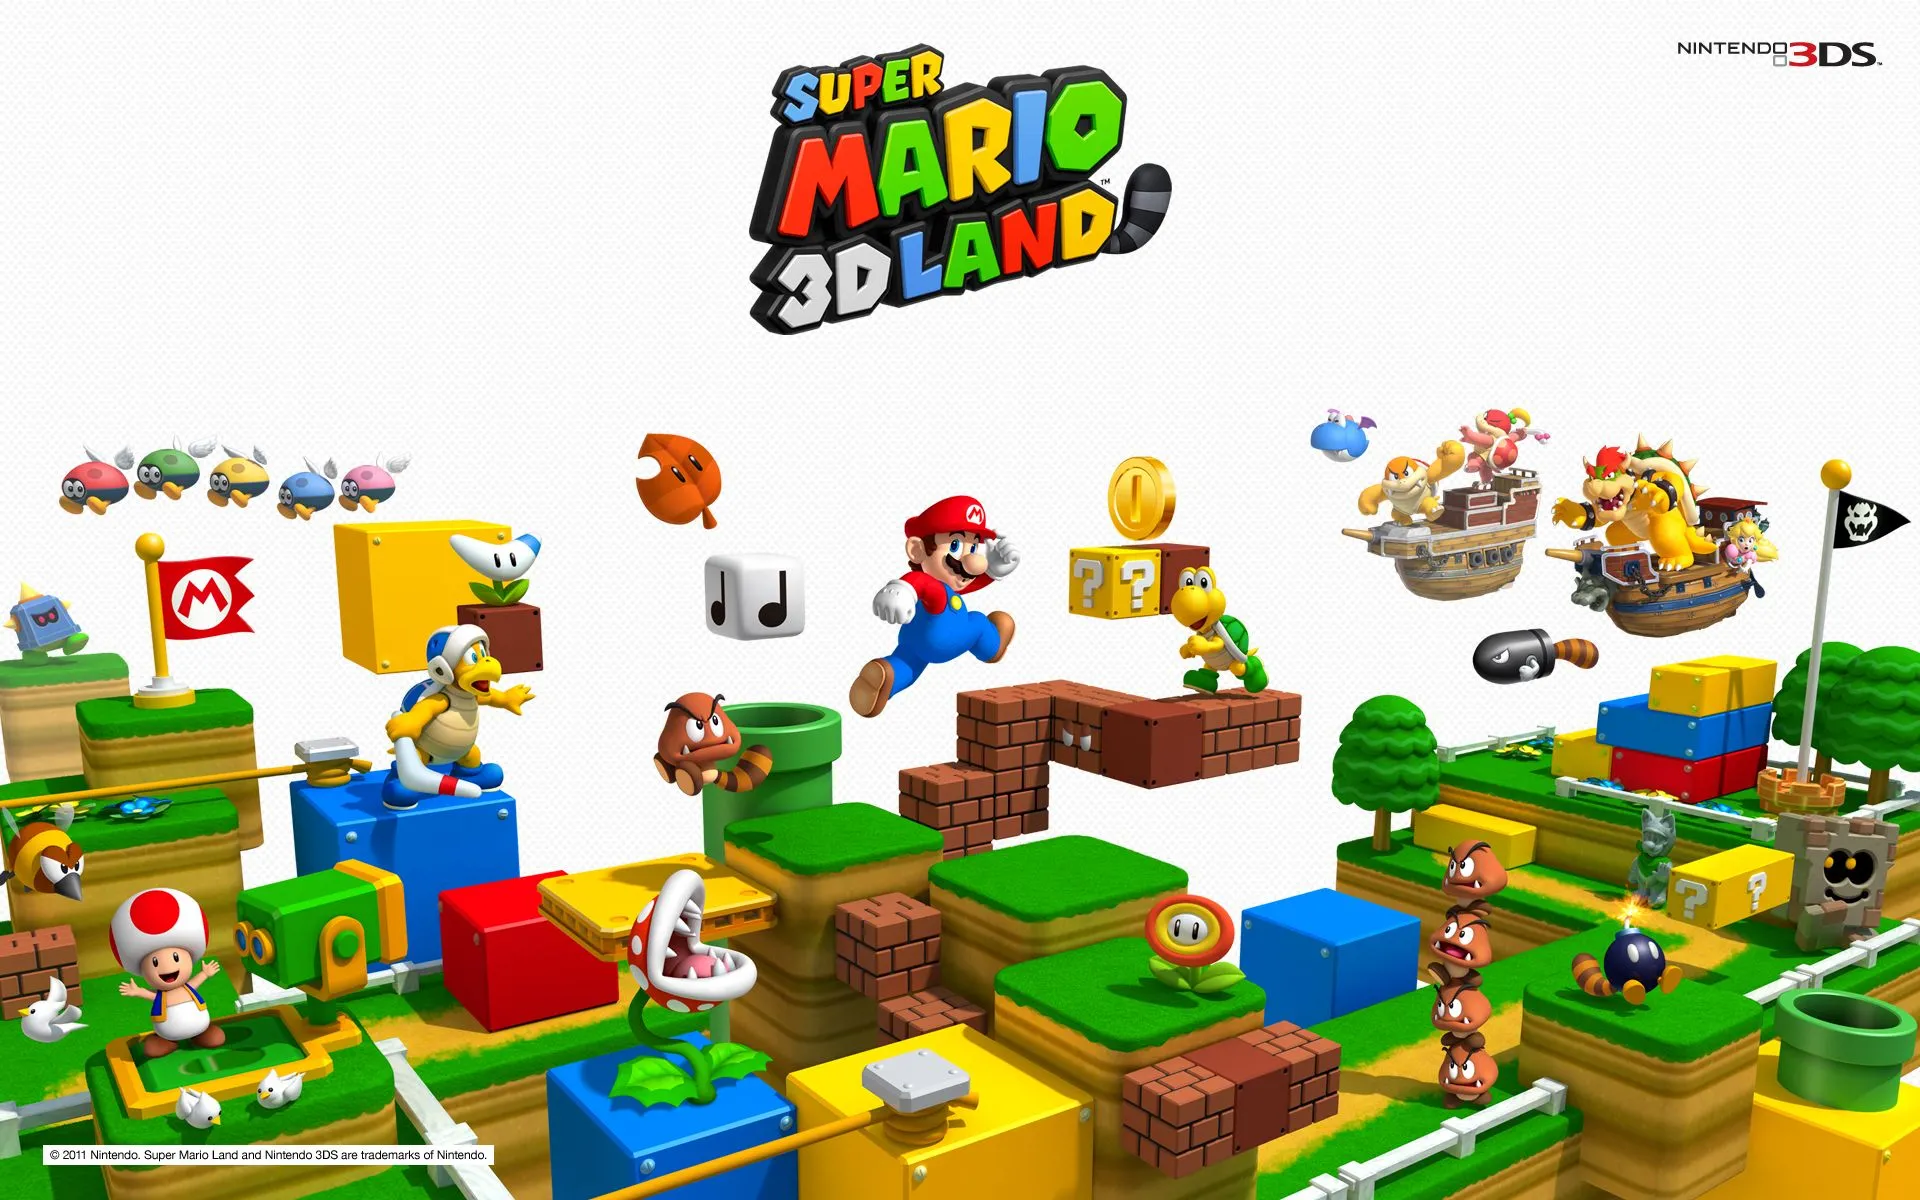 Super Mario 3D Land Wallpaper added | Pure Nintendo